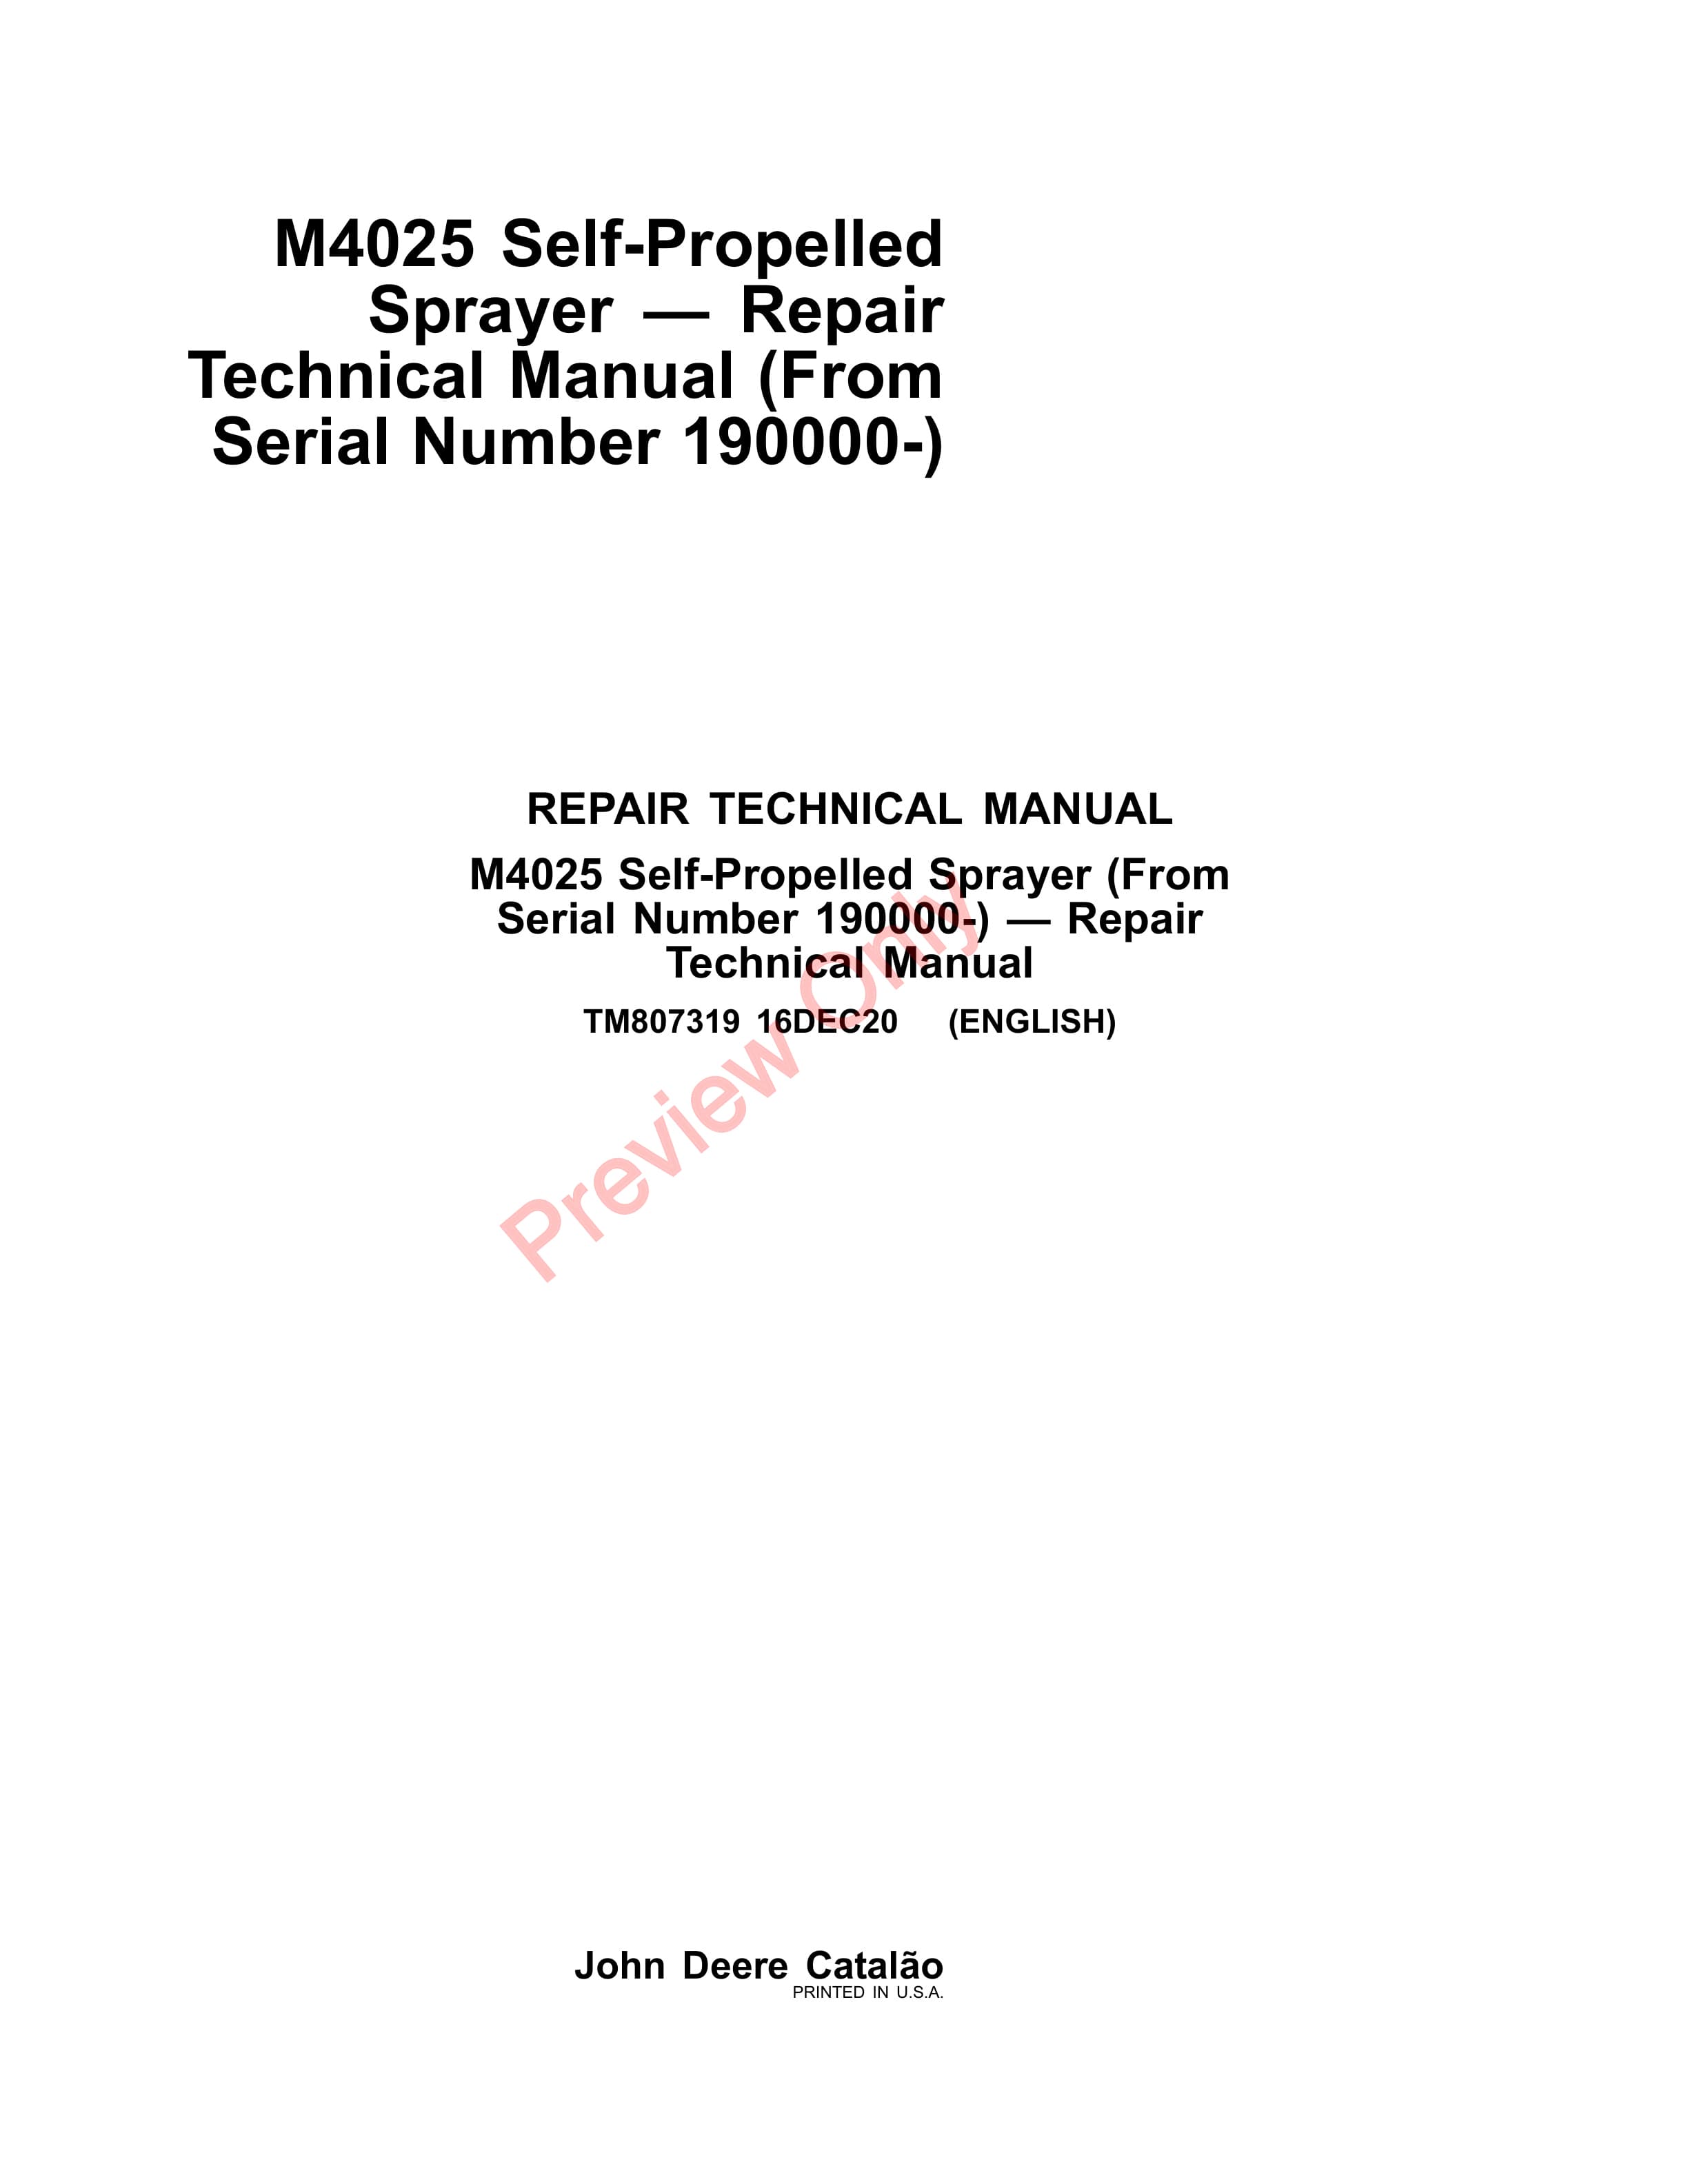 John Deere M4025 Self Propelled Sprayer Repair Technical Manual TM807319 16DEC20 1